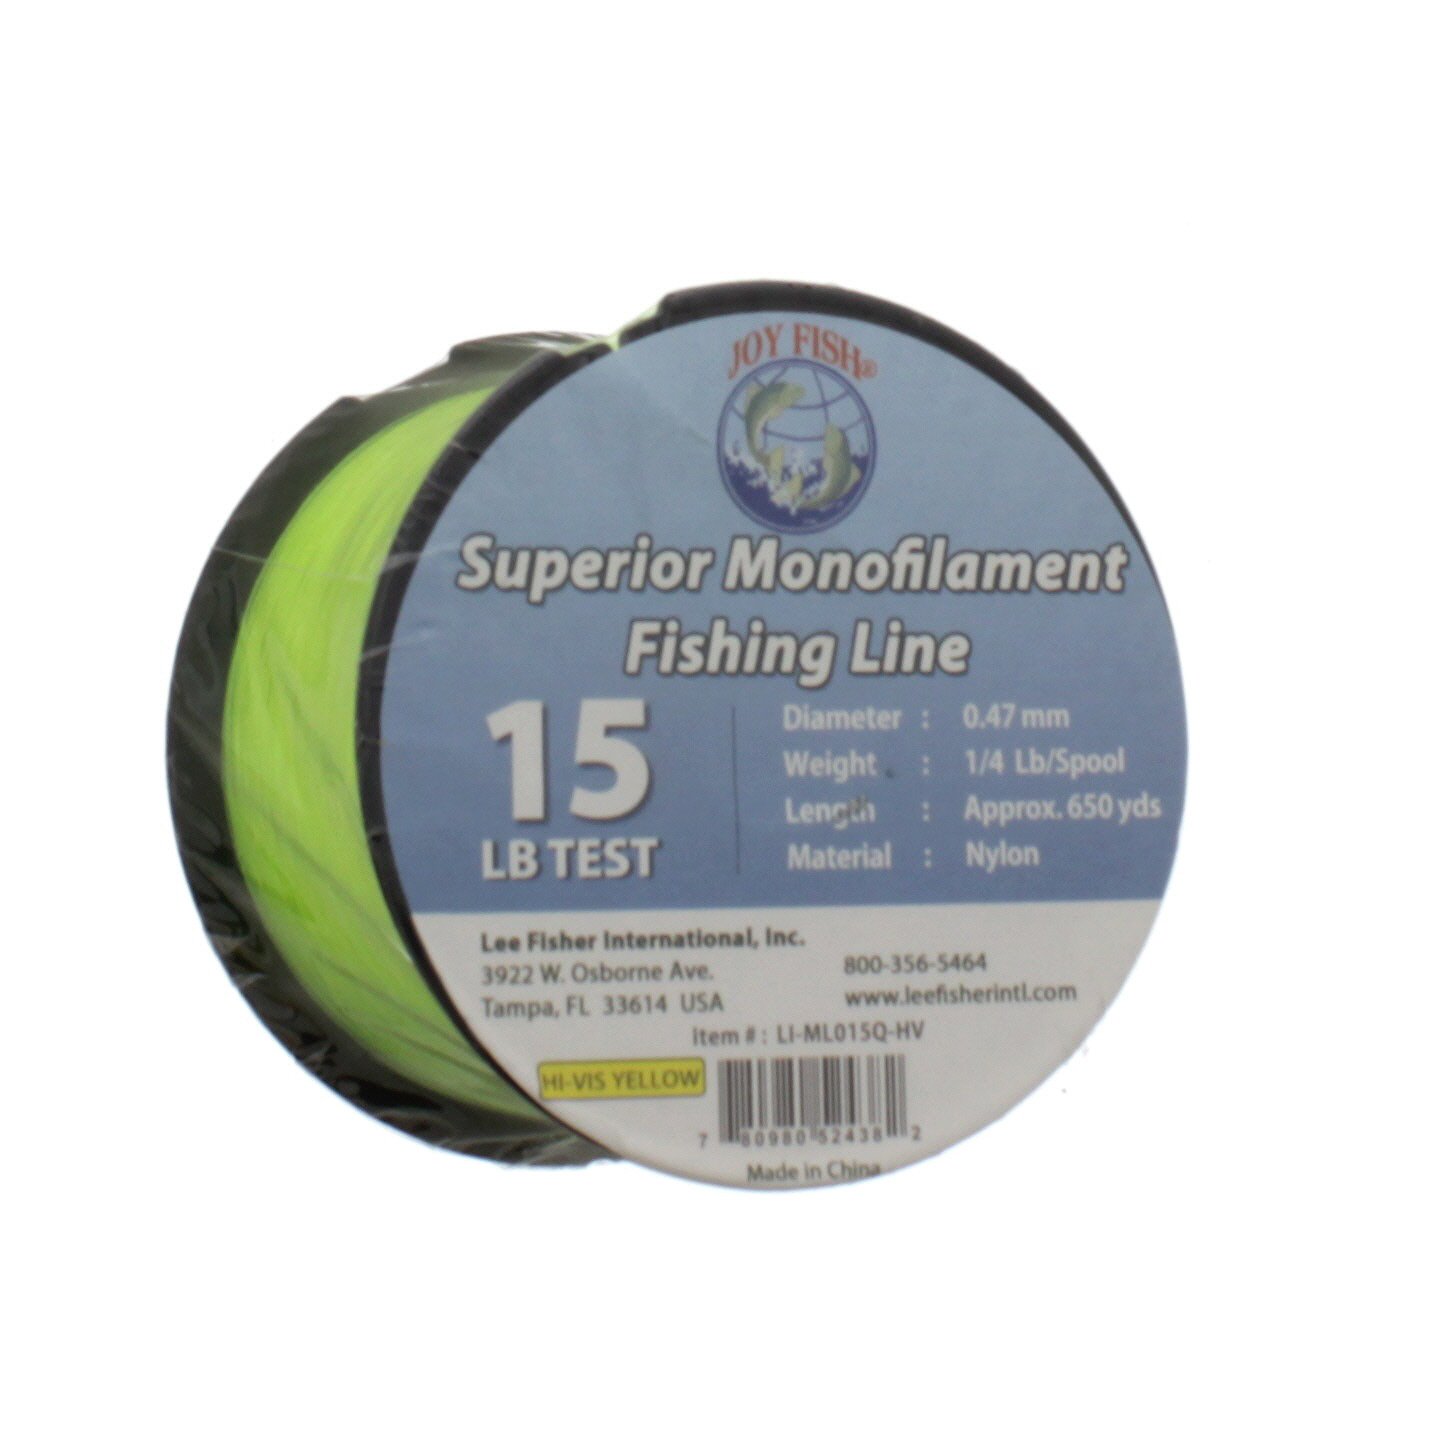  Joy Fish monofilament fishing line 1 lb spool, 80 lb